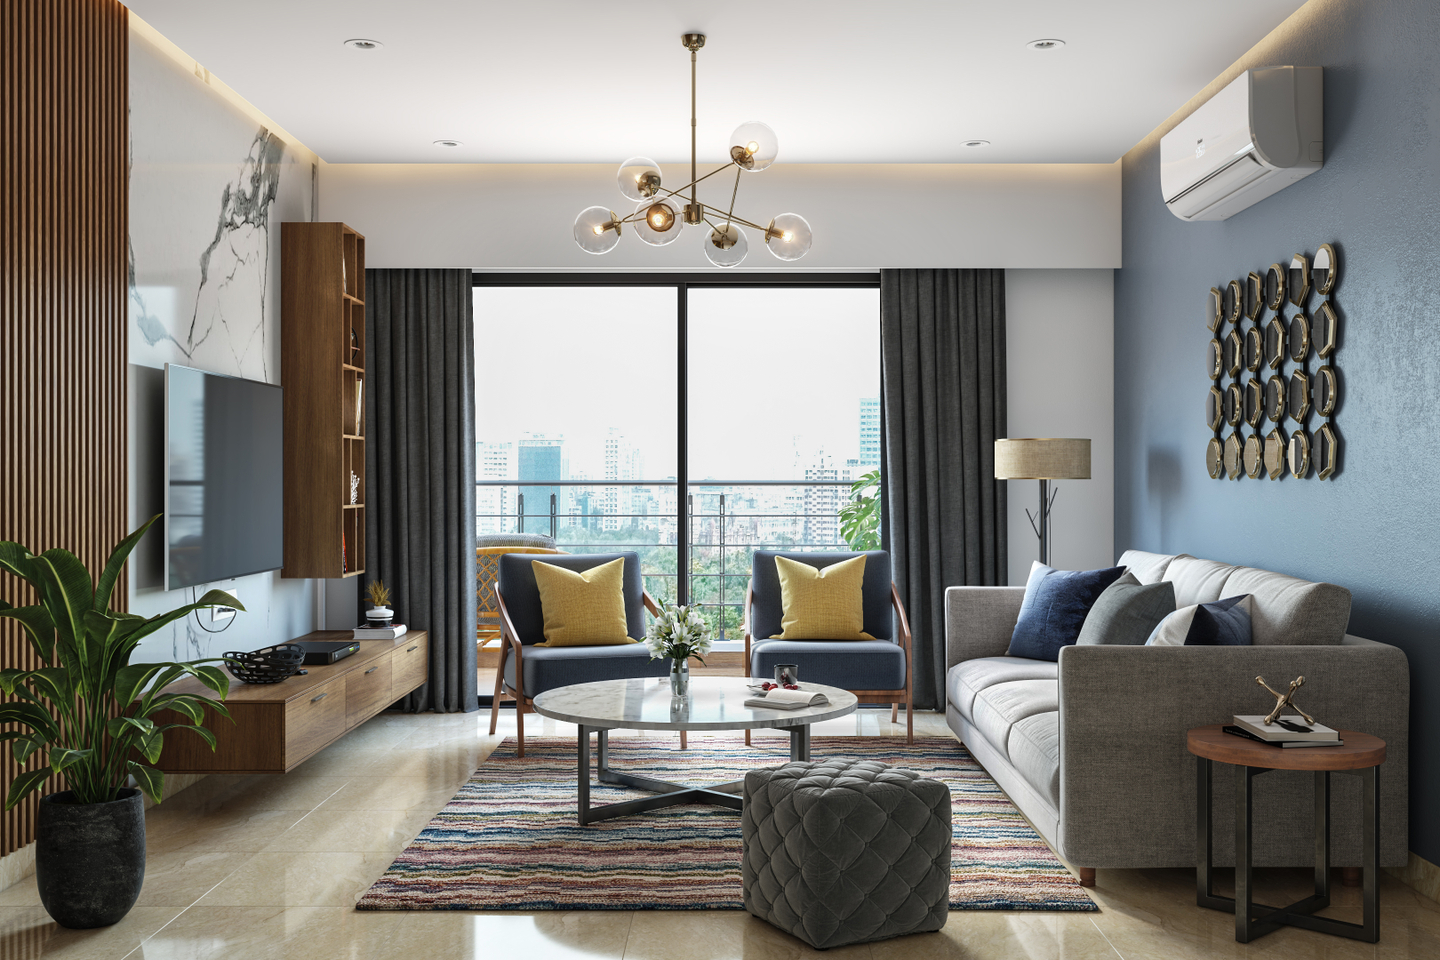 Living Room Design With Blue Walls - Livspace